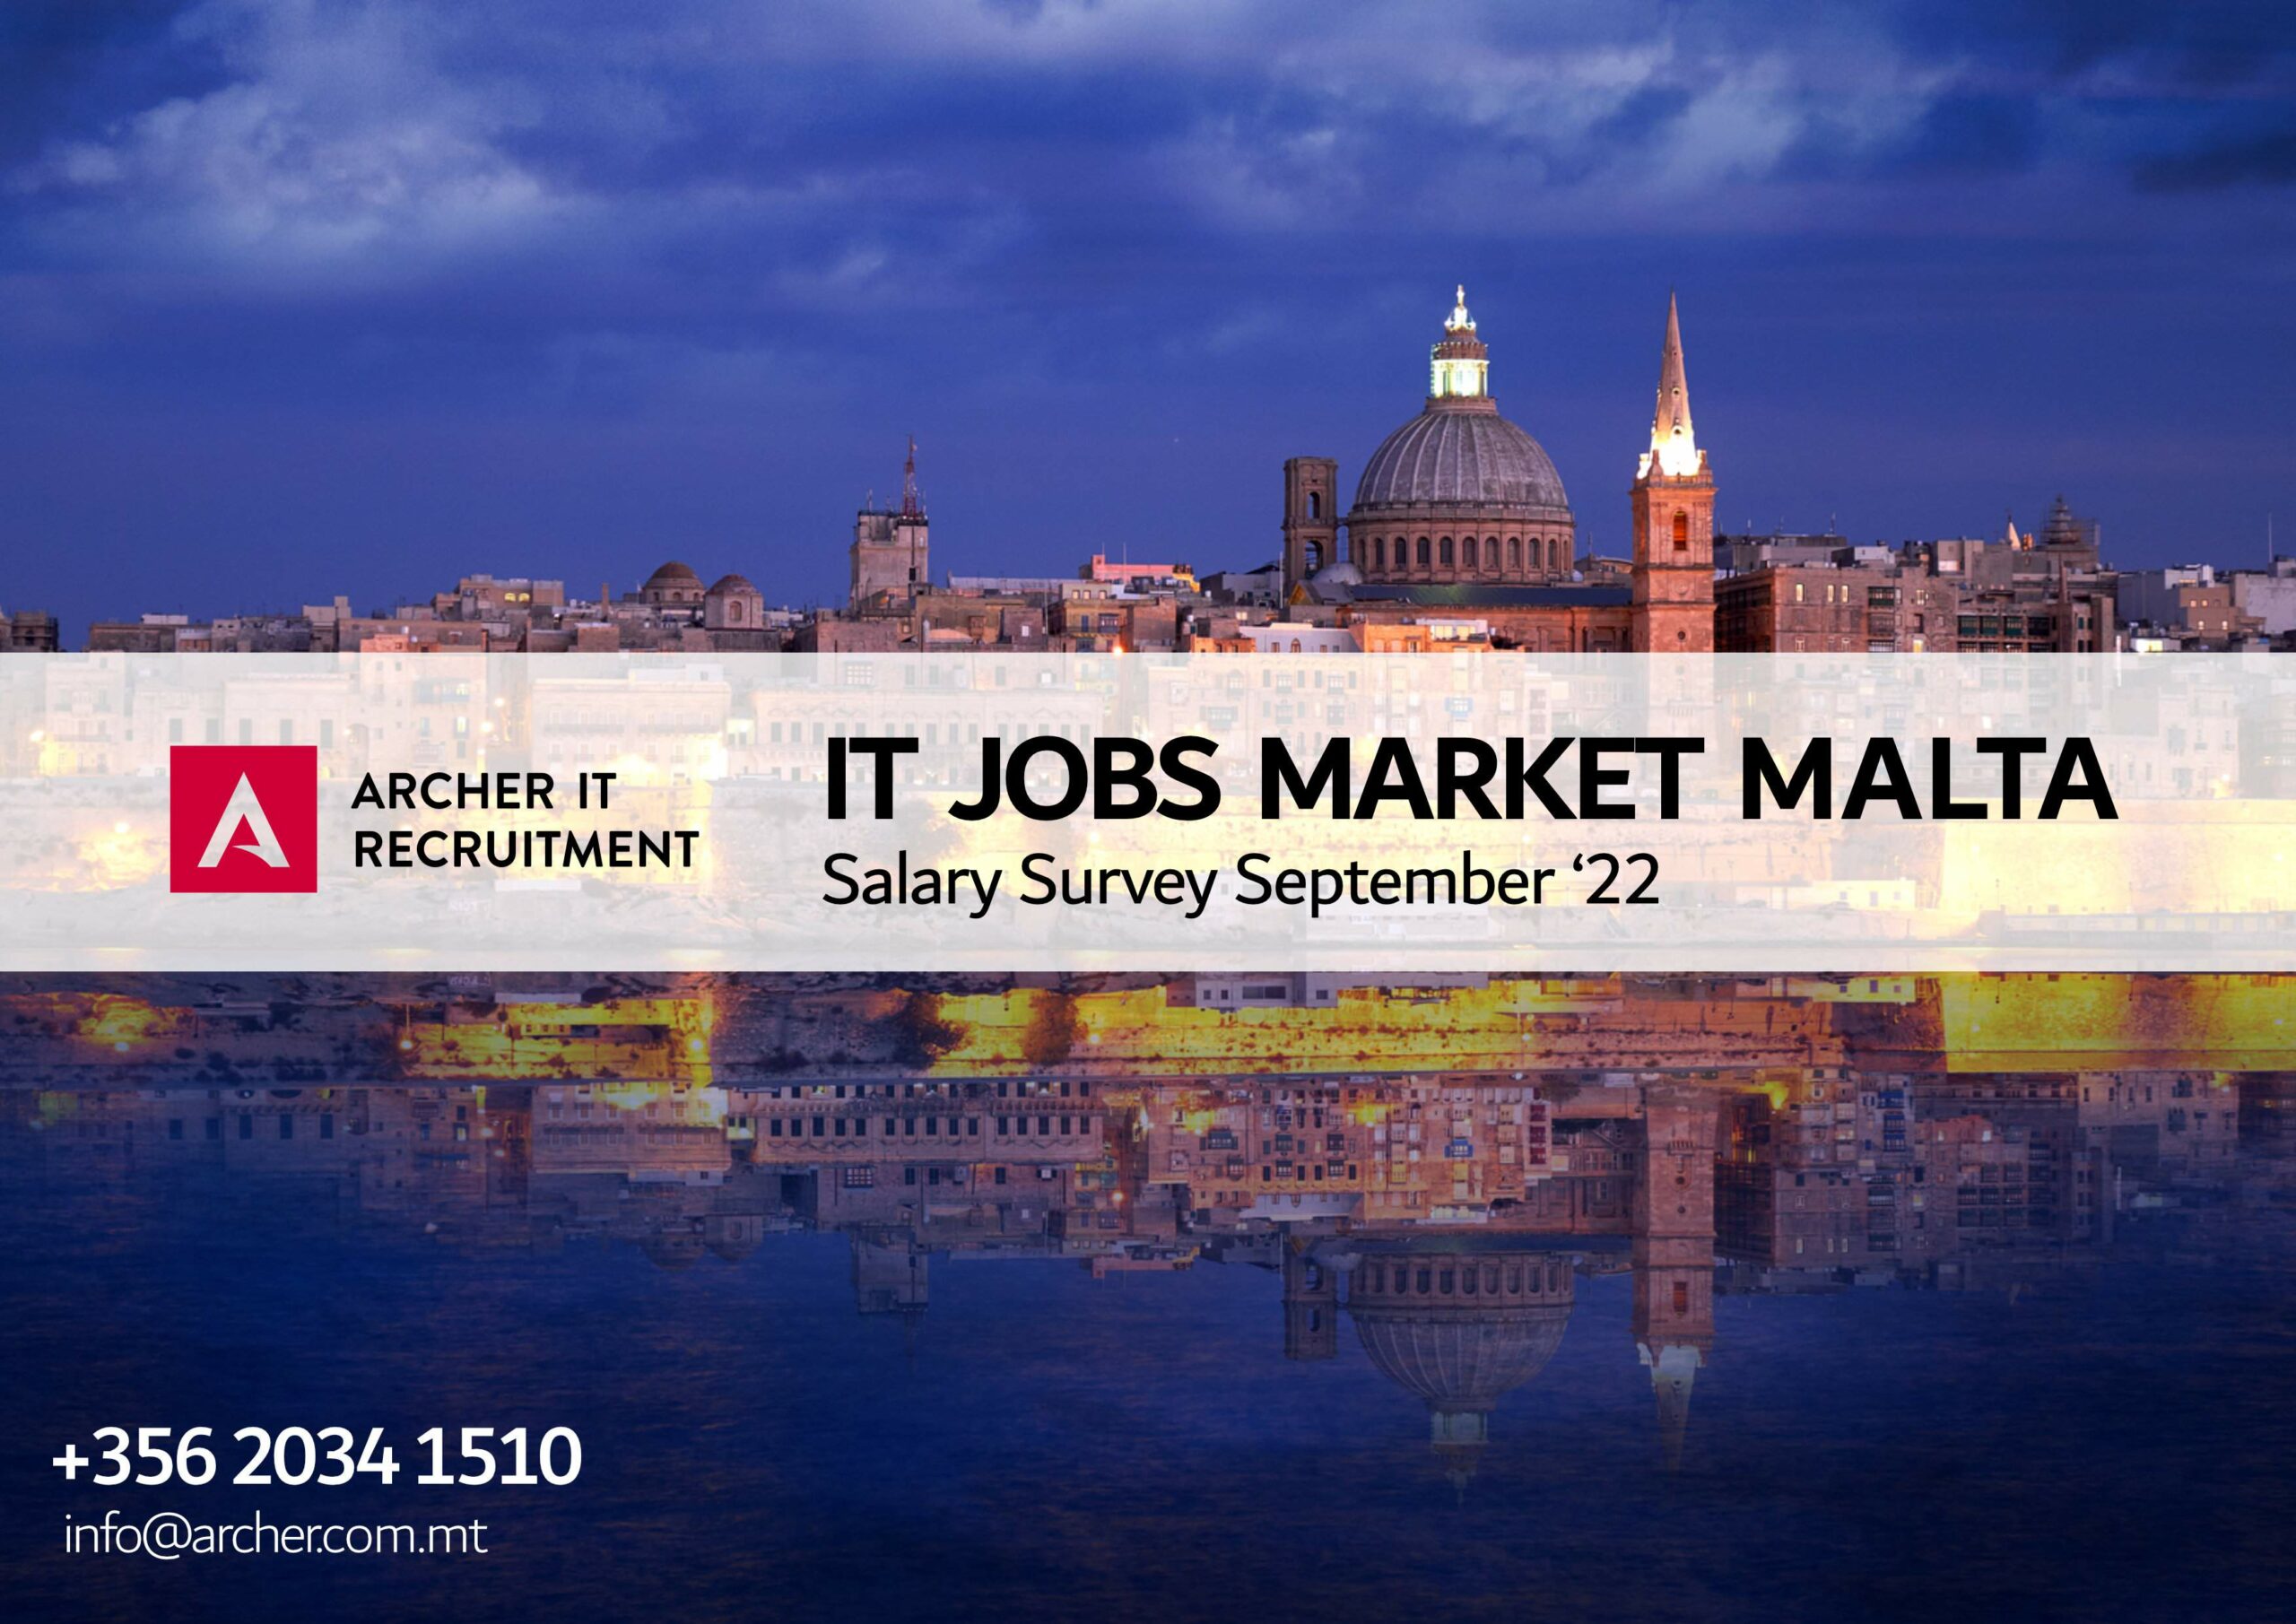 Archer IT Recruitment Malta Salary Survey September 2022